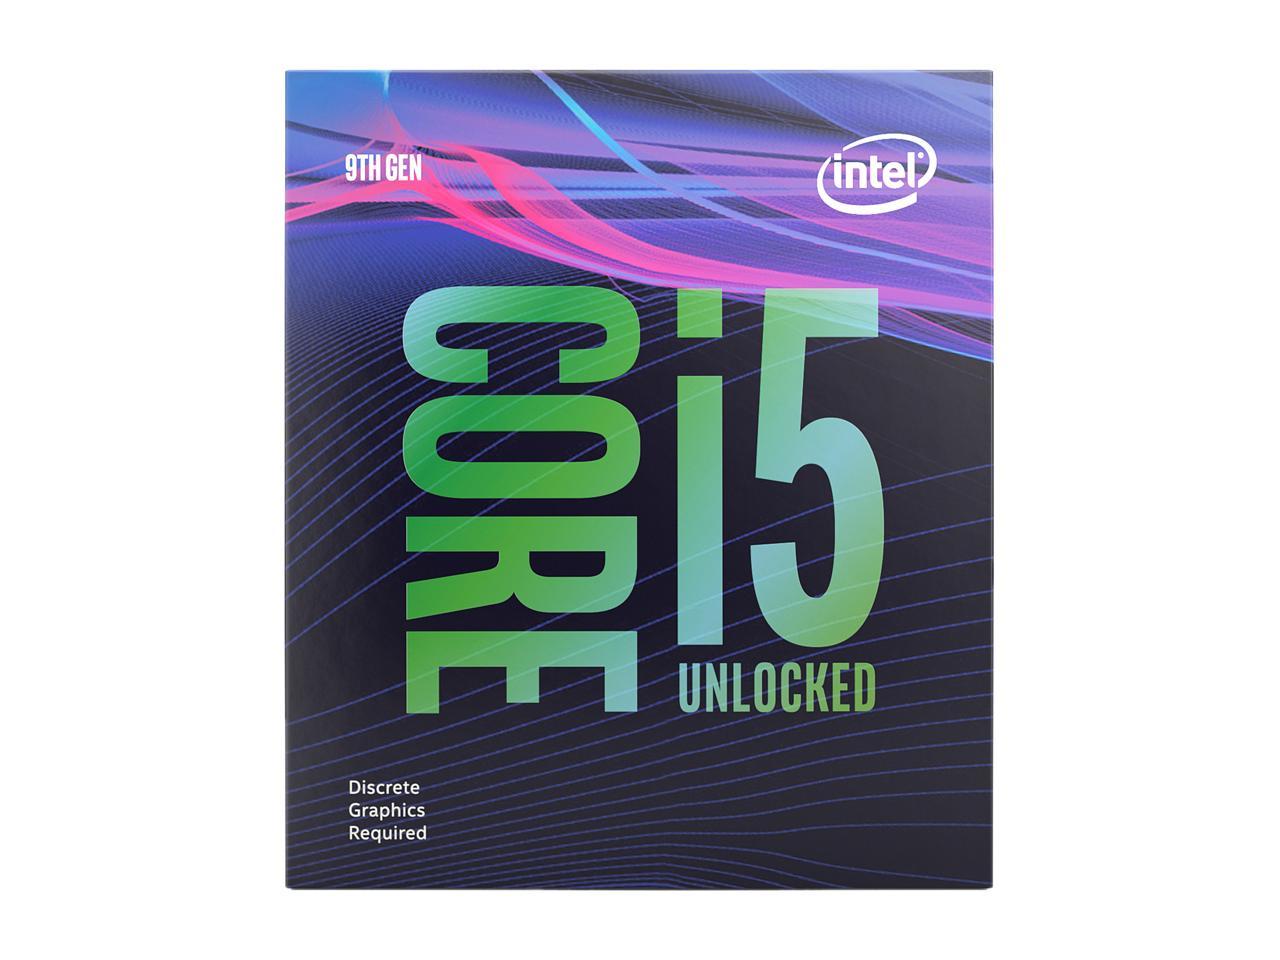 19 117 996 v02 Intel ลดราคา Intel Core i5 9600KF รุ่นใหม่ล่าสุด 6C/6T ความเร็ว 3.6Ghz   4.6Ghz ในราคาต่ำกว่า 200ดอลล่าสหรัฐฯเพื่อตีตลาดคอเกมส์เมอร์โดยเฉพาะ